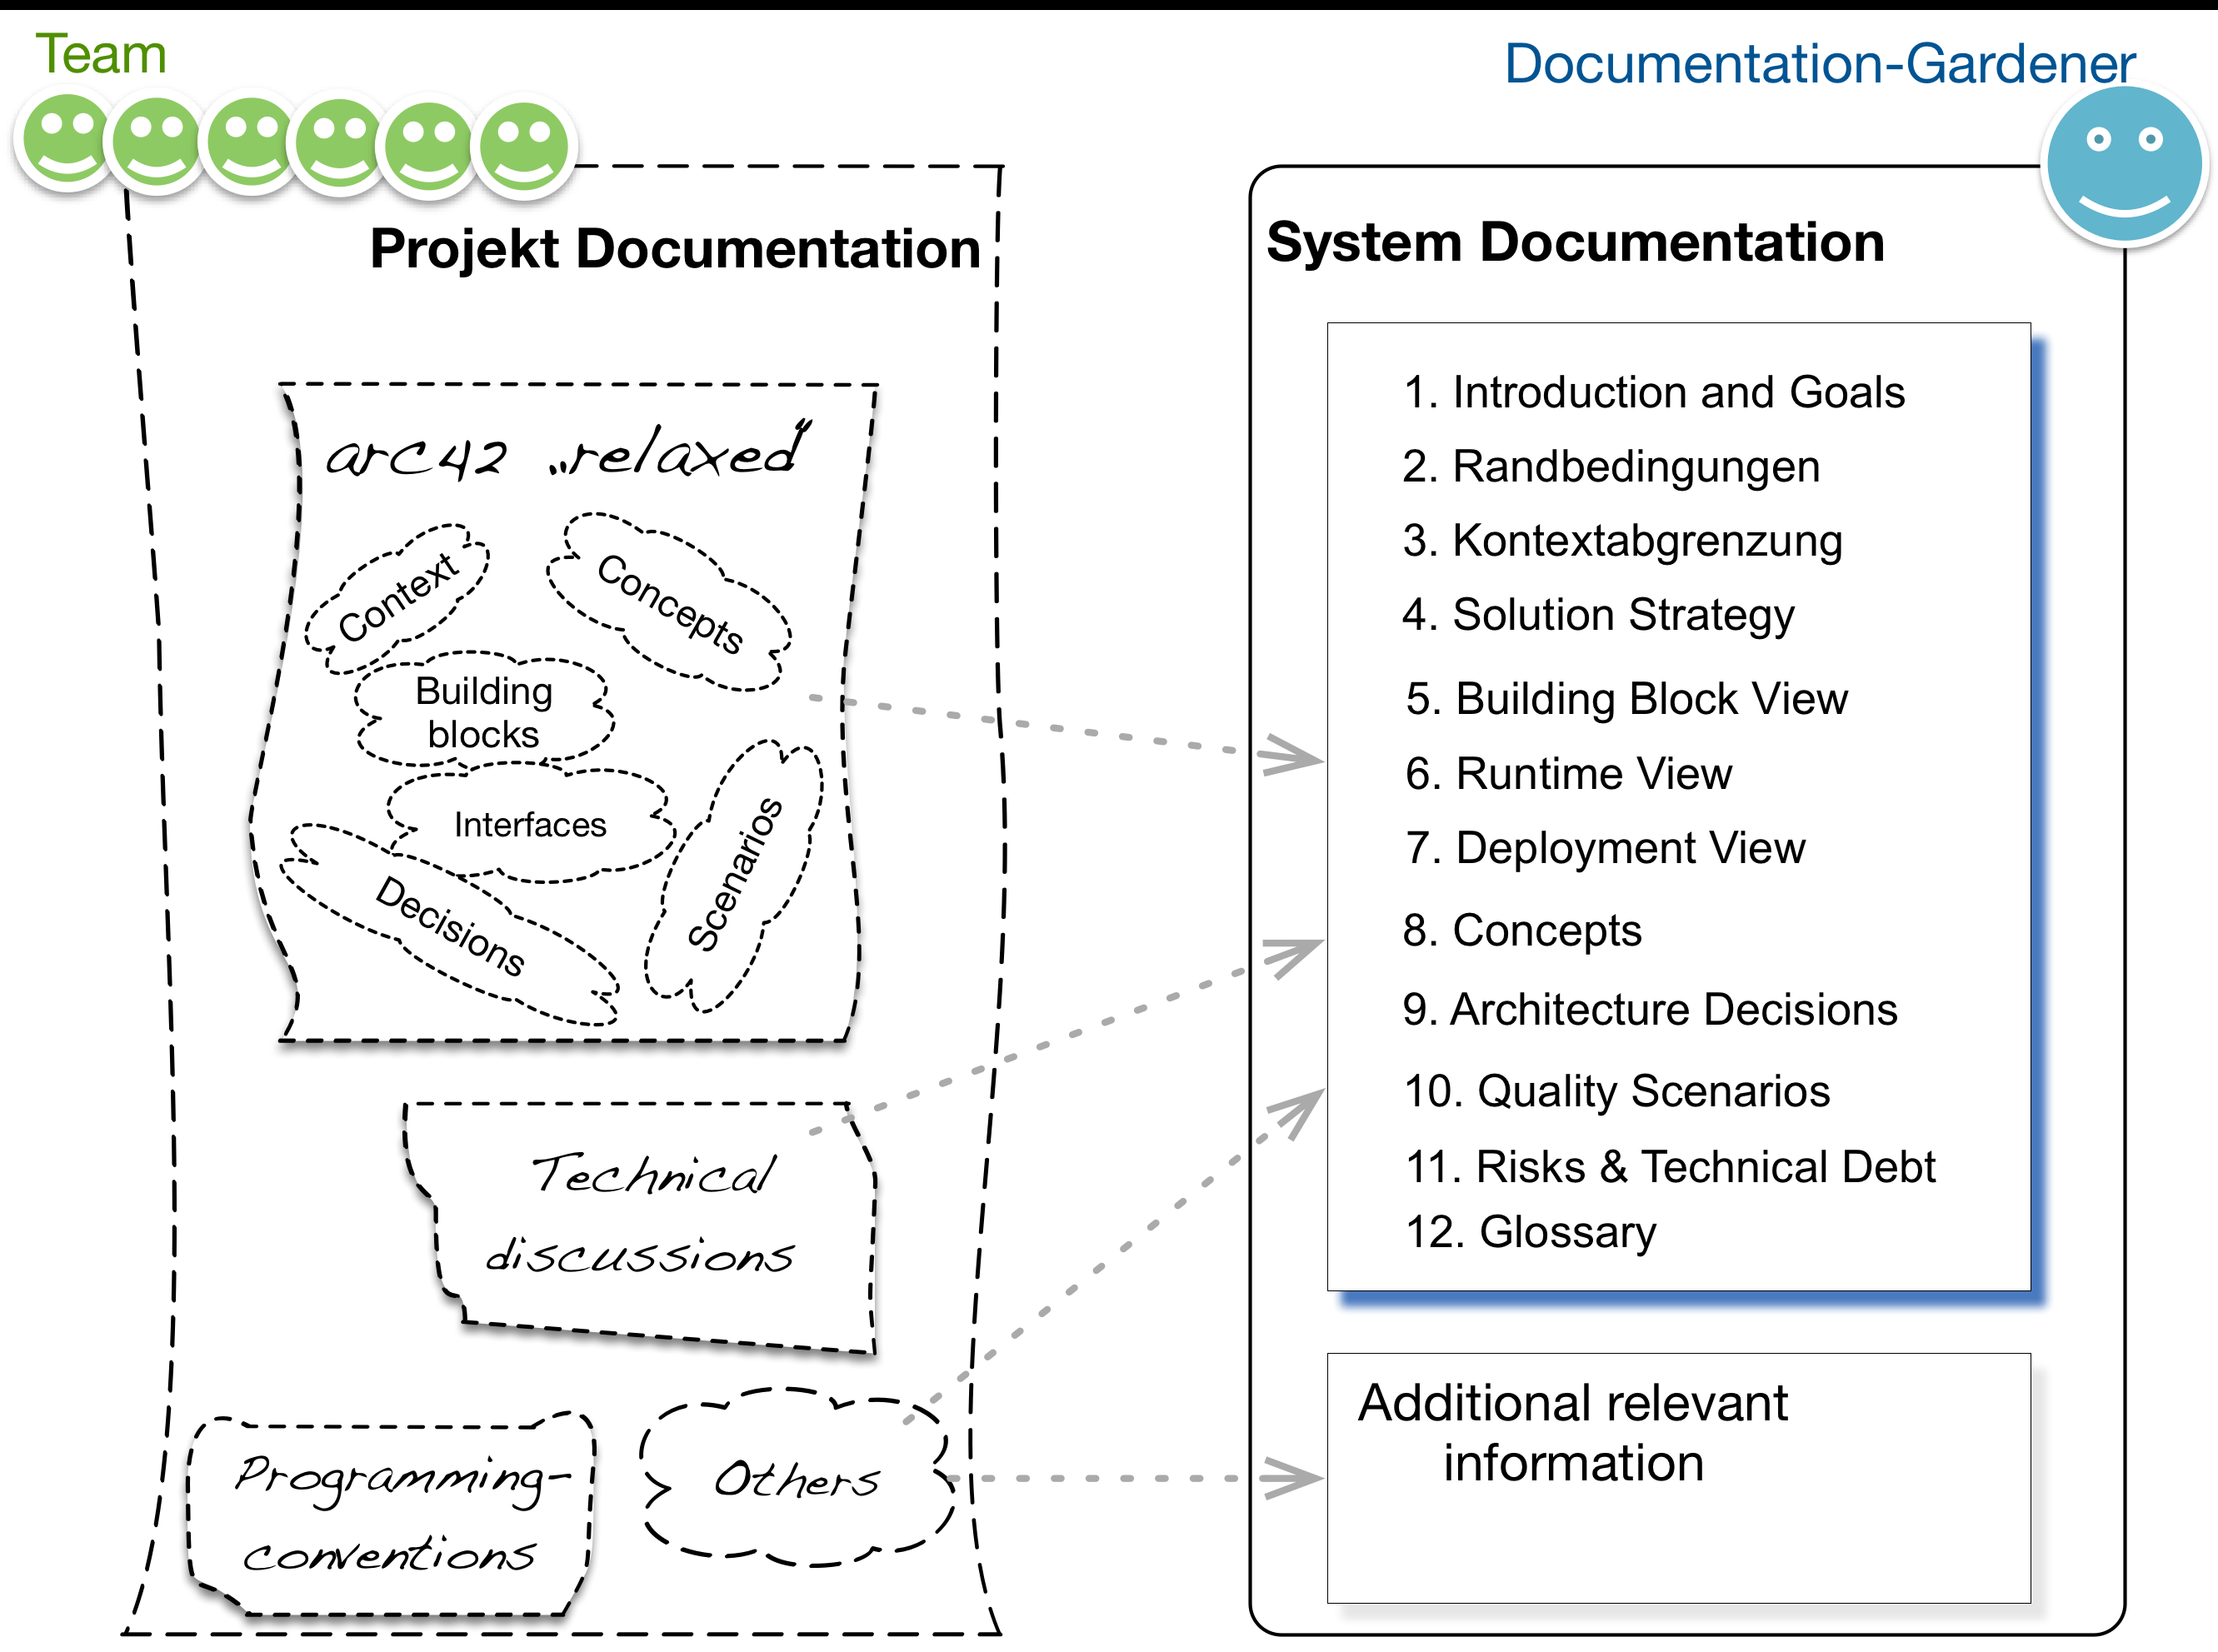 Project versus System documentation